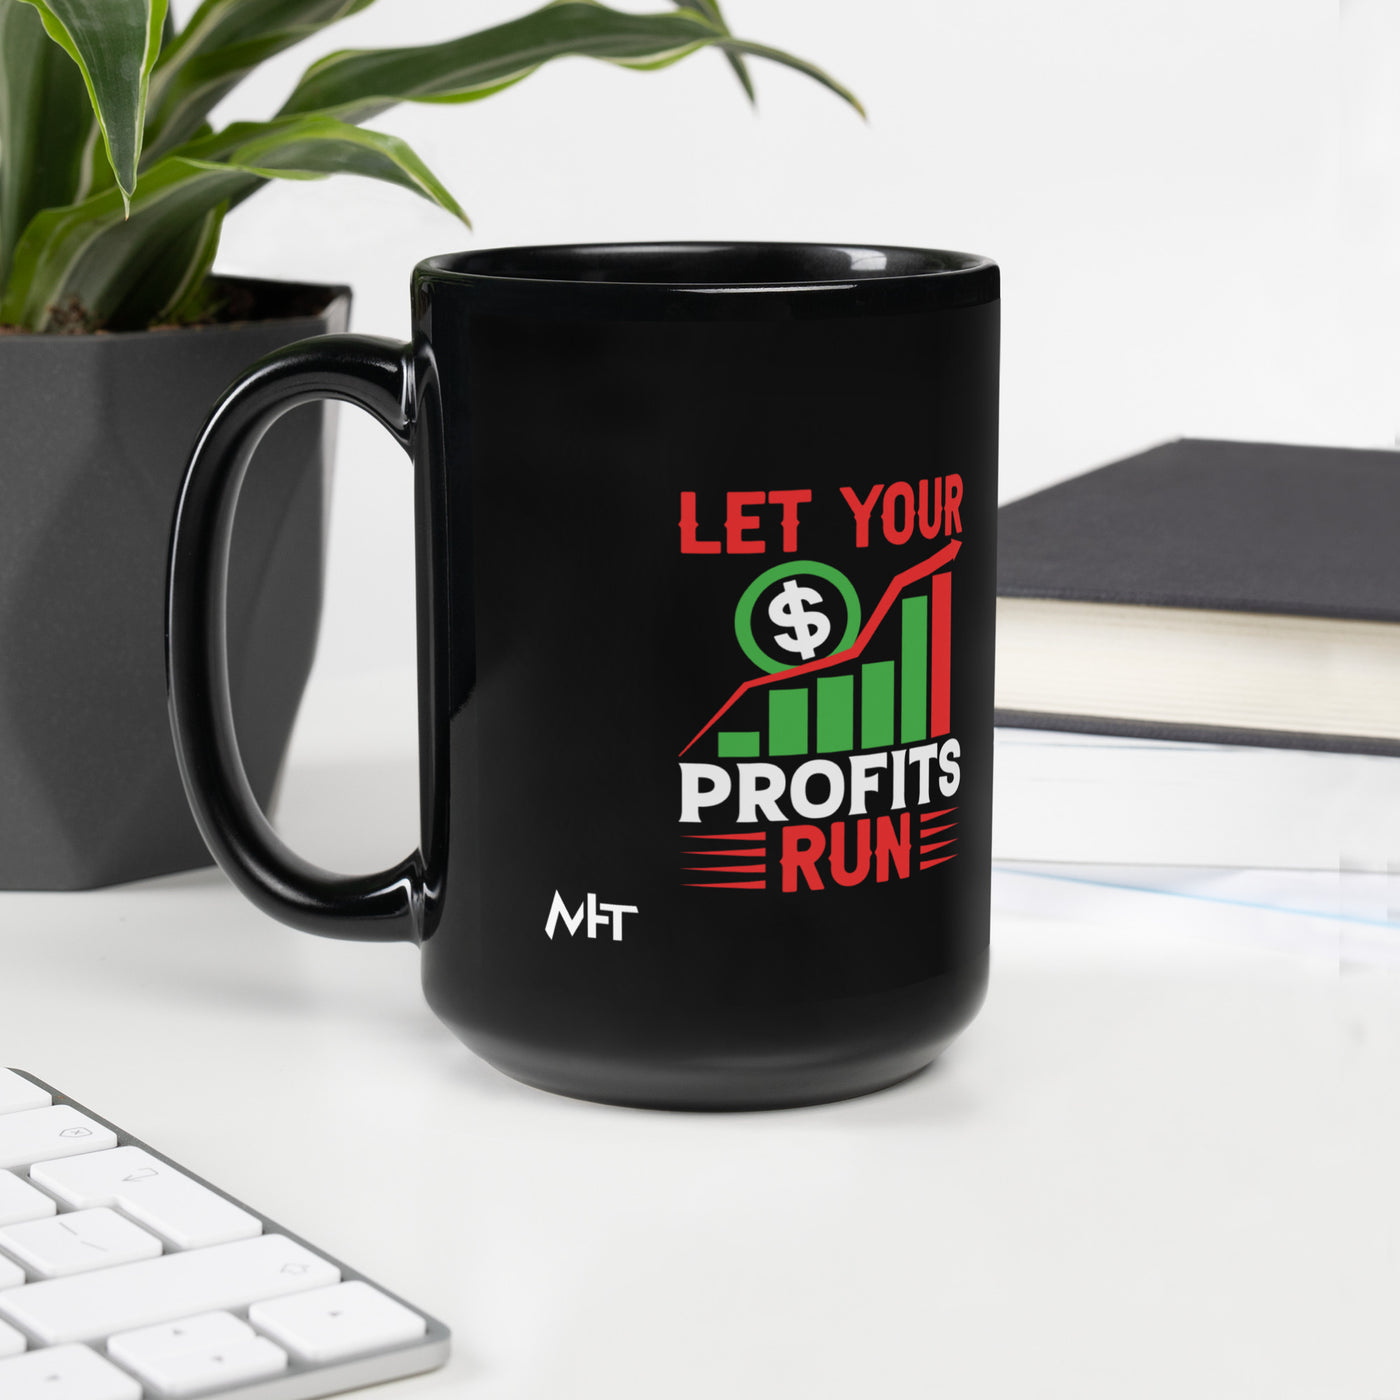 Let your Profits run V1 - Black Glossy Mug